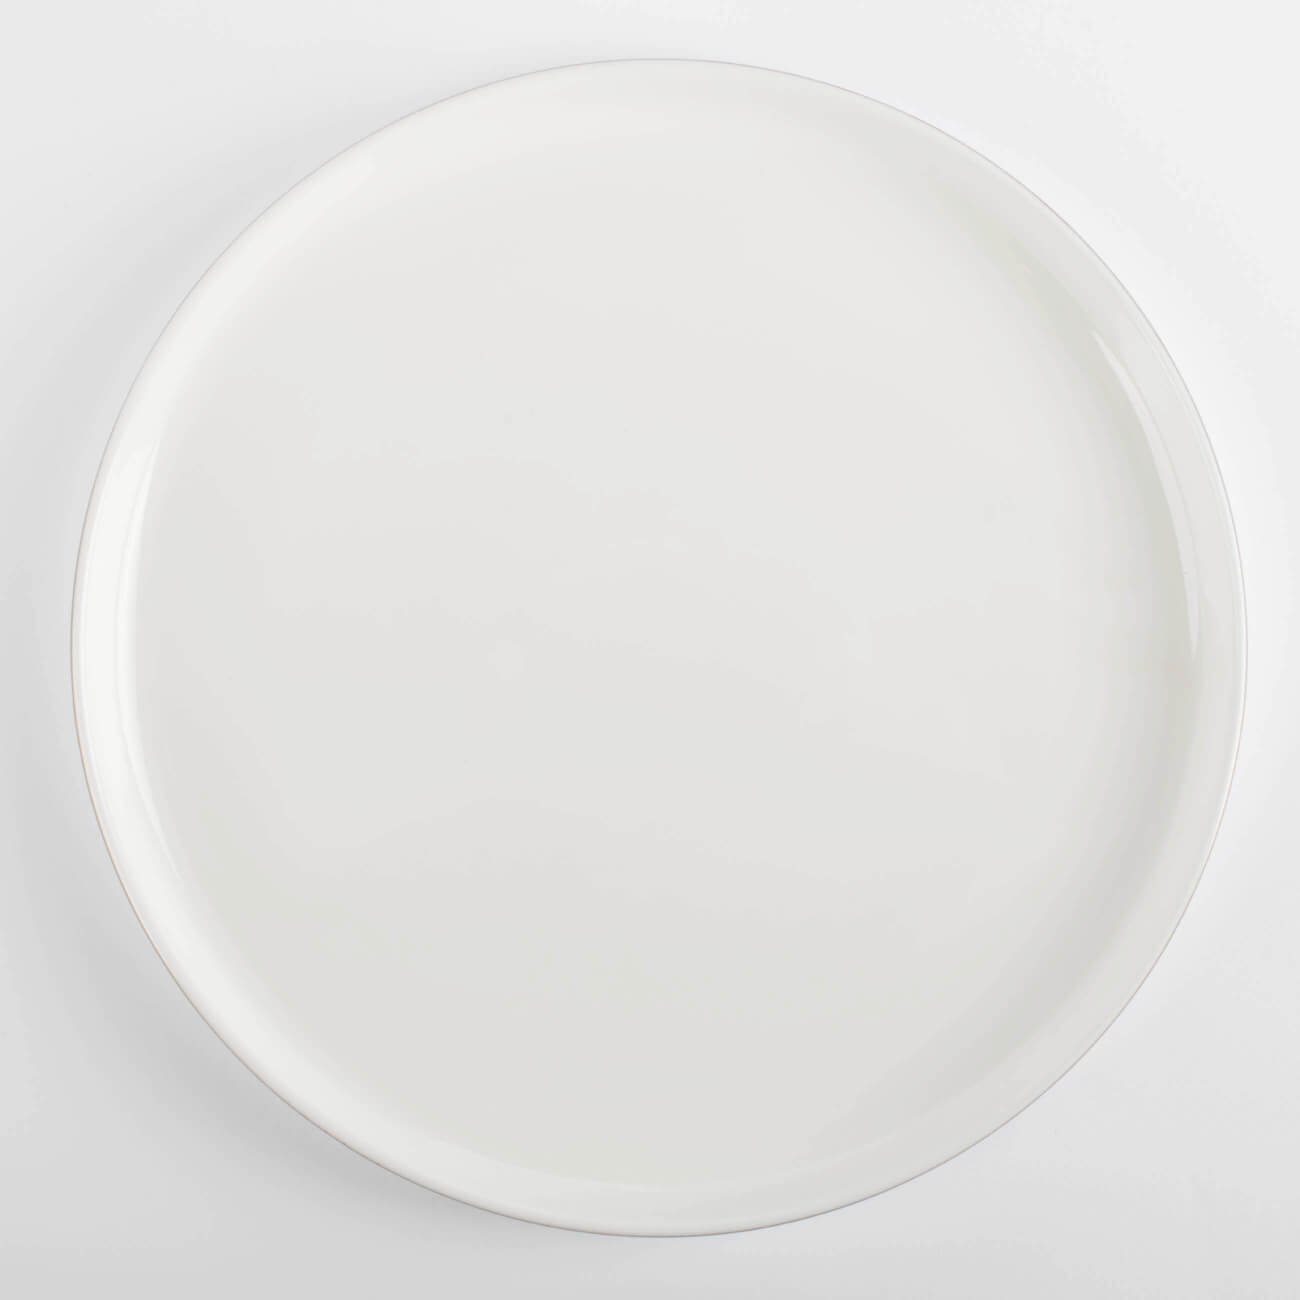 Тарелка обеденная, 26 см, фарфор F, белая, Ideal gold тарелка обеденная tudor royal circle 26 см